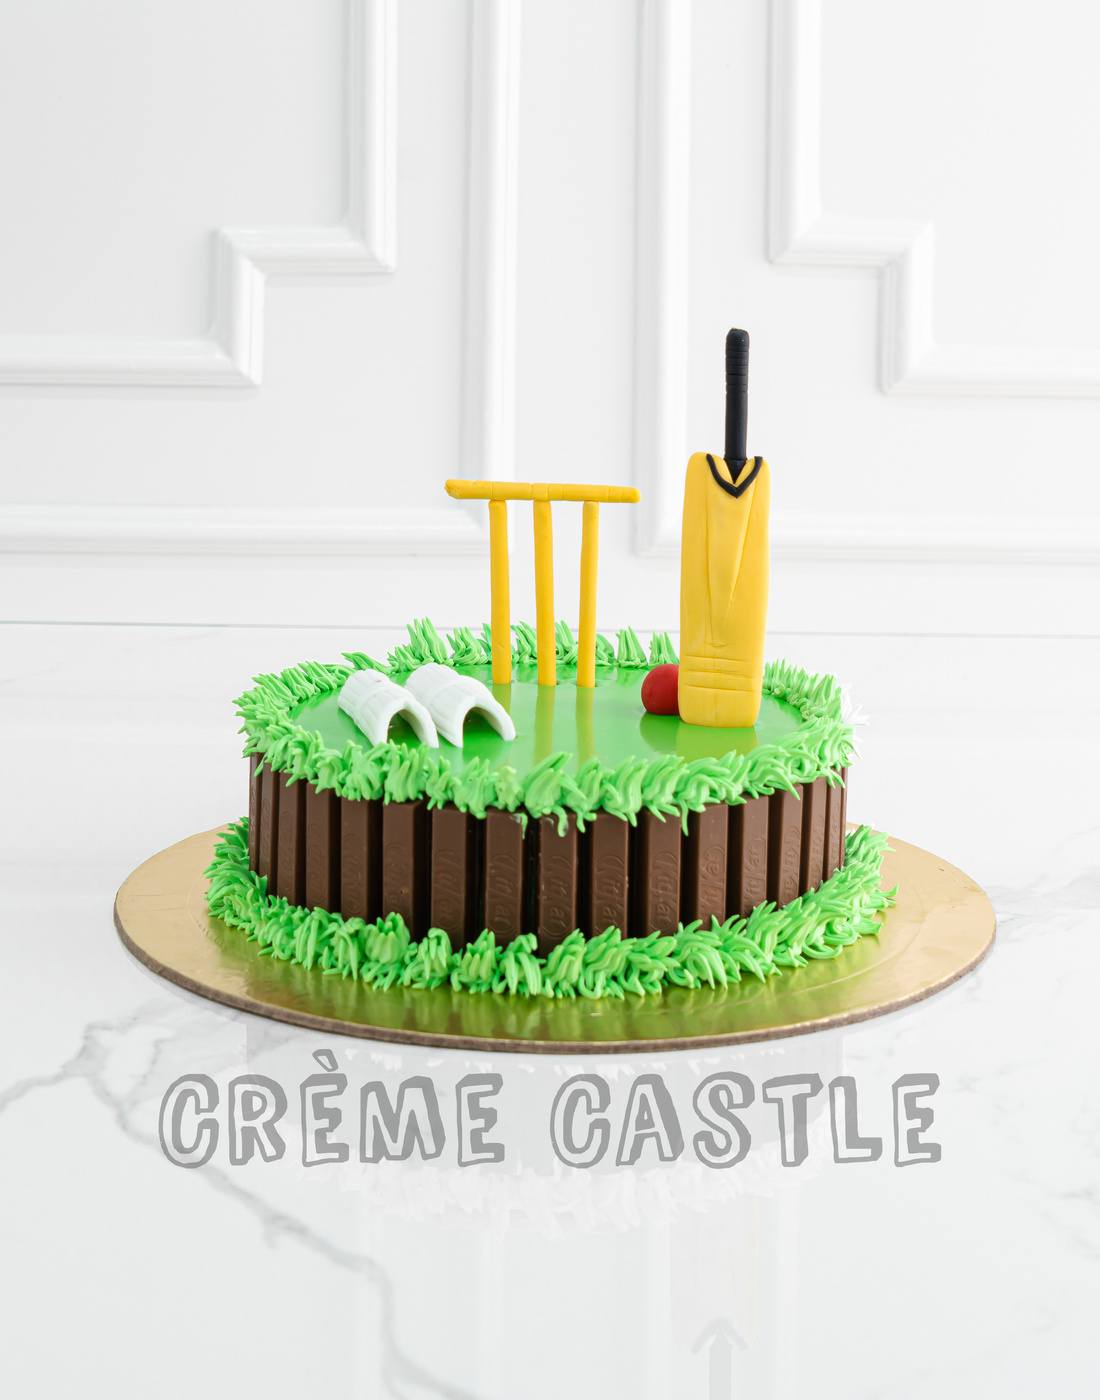 Cricket ball cake for my husband's birthday : r/cakedecorating